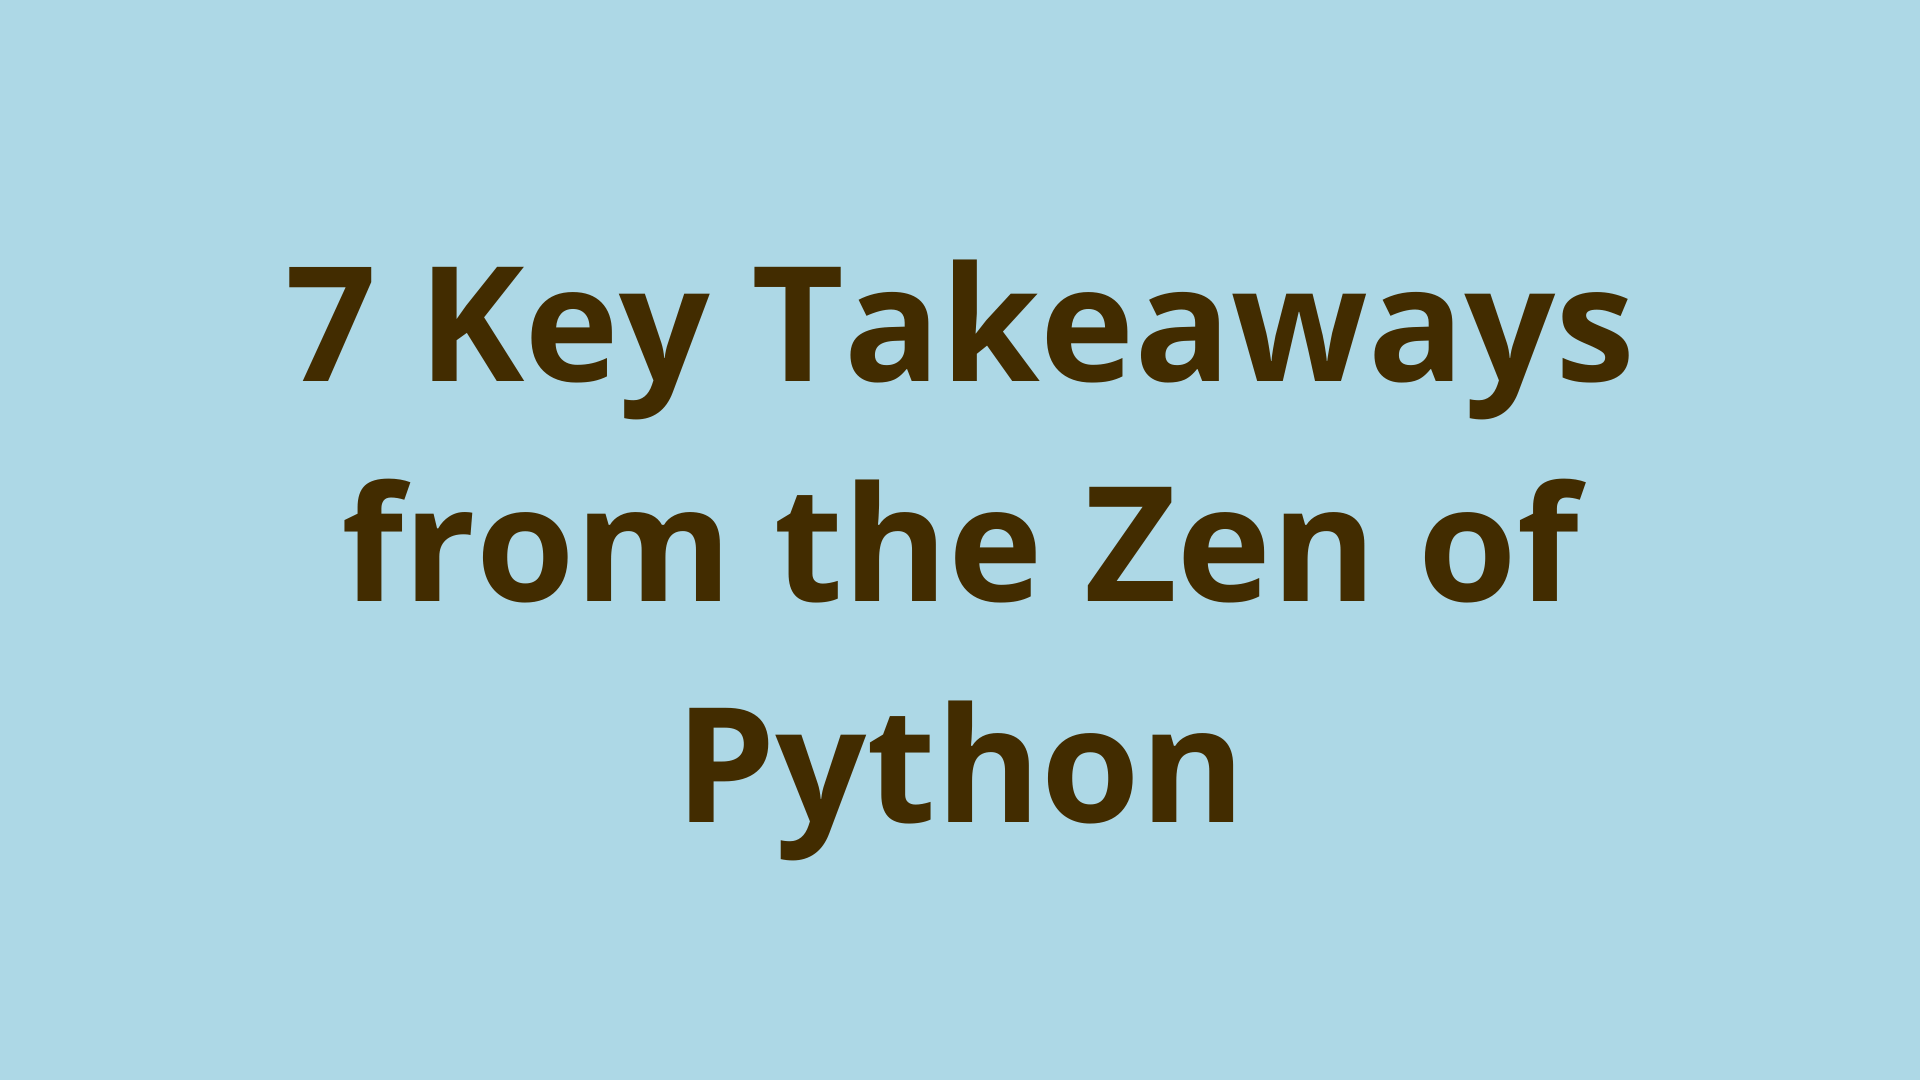 7 Key Takeaways from the Zen of Python